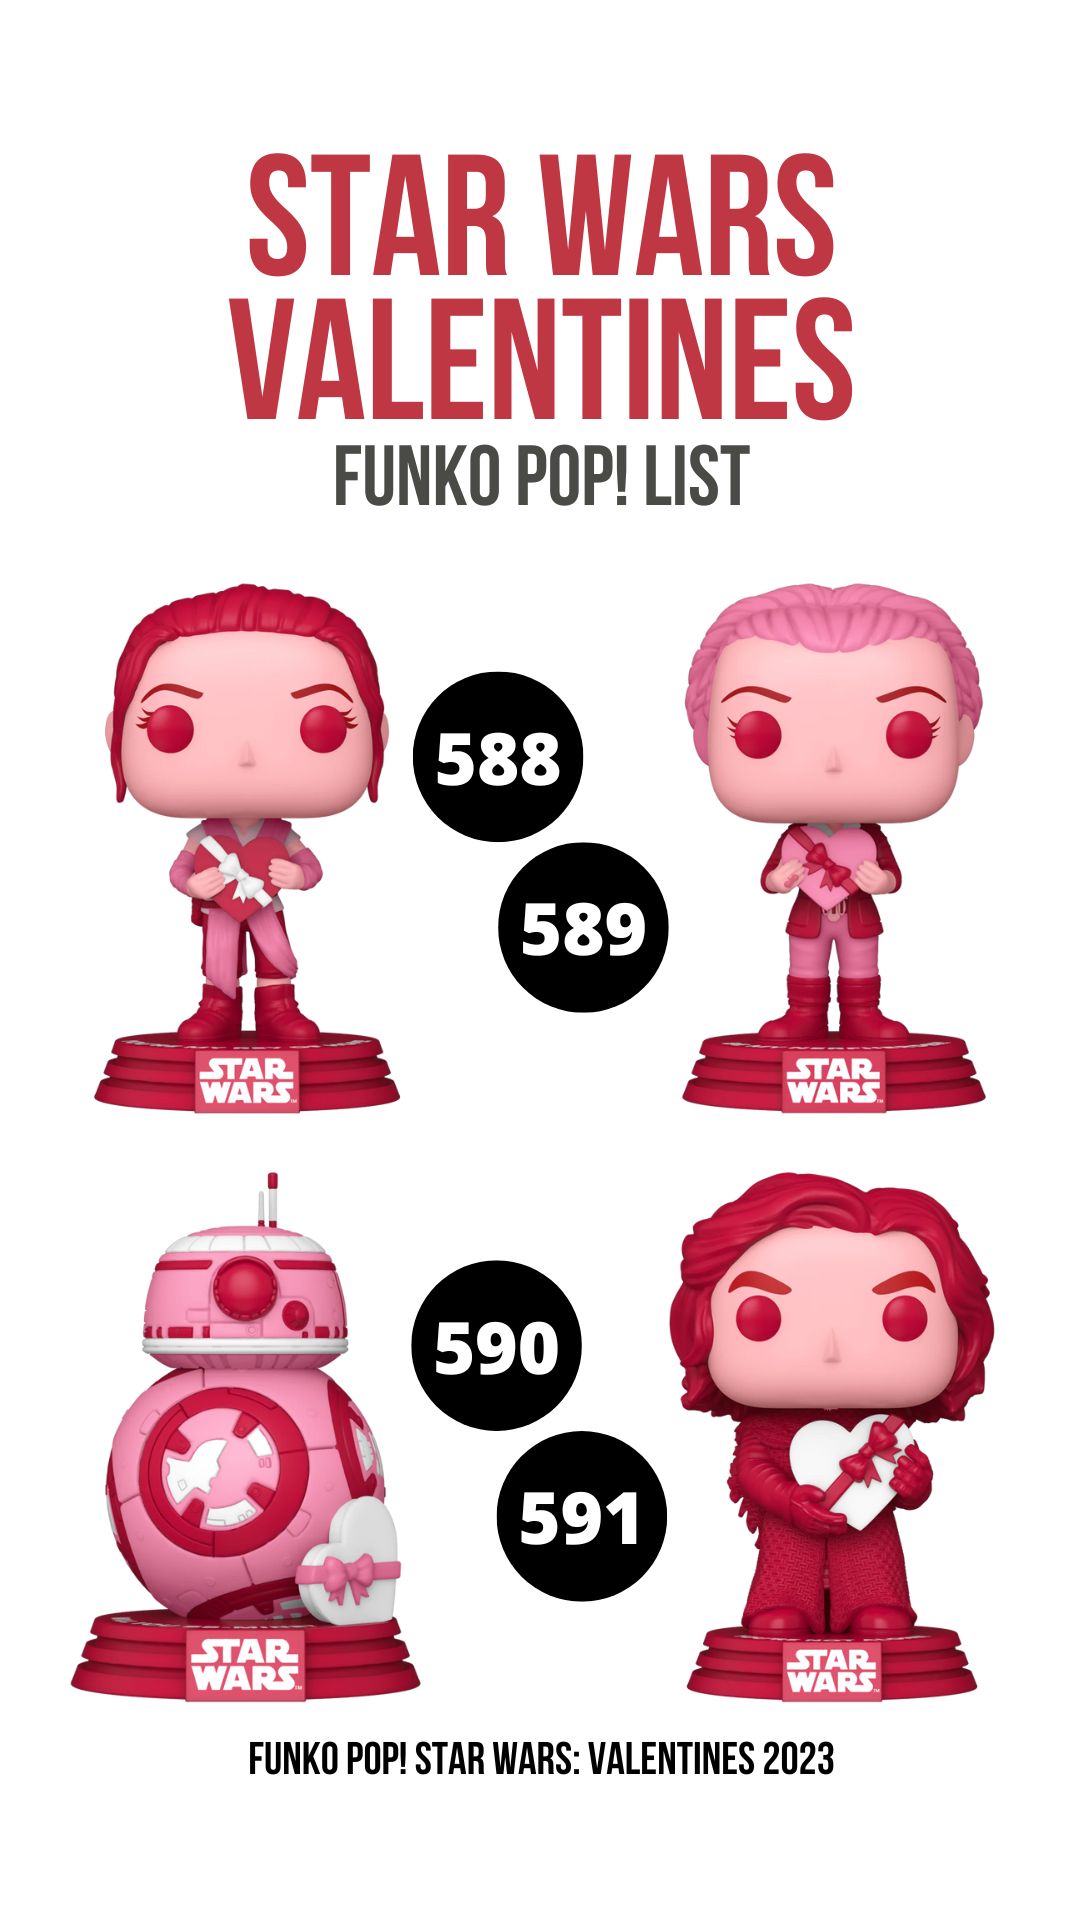 Star Wars Funko Pop Valentines List of Figures 2023